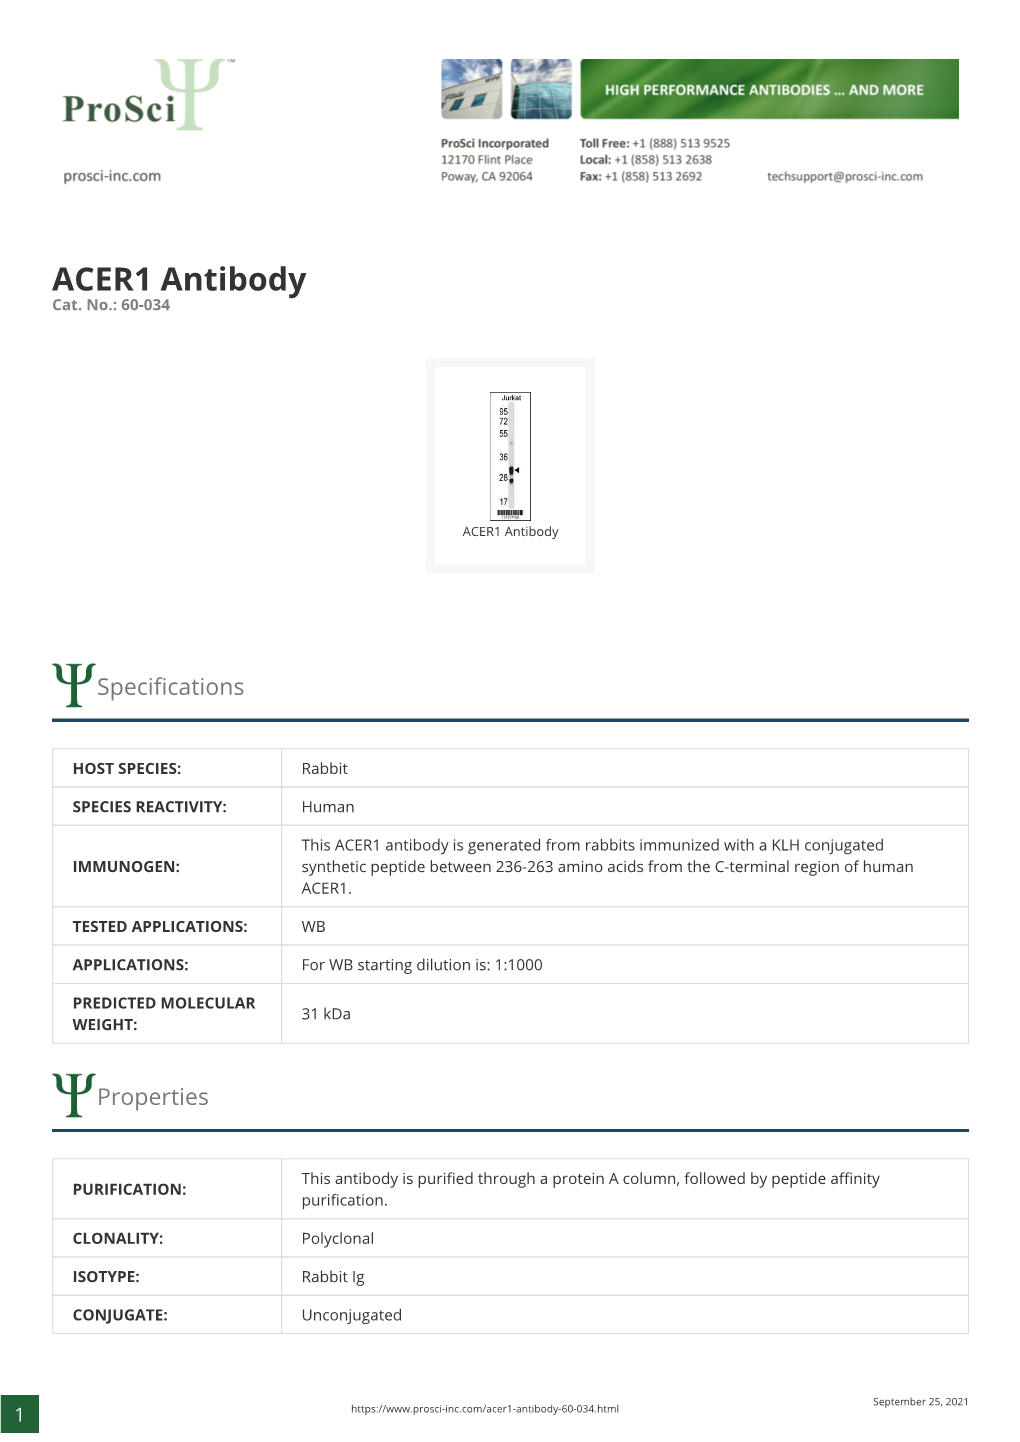 ACER1 Antibody Cat